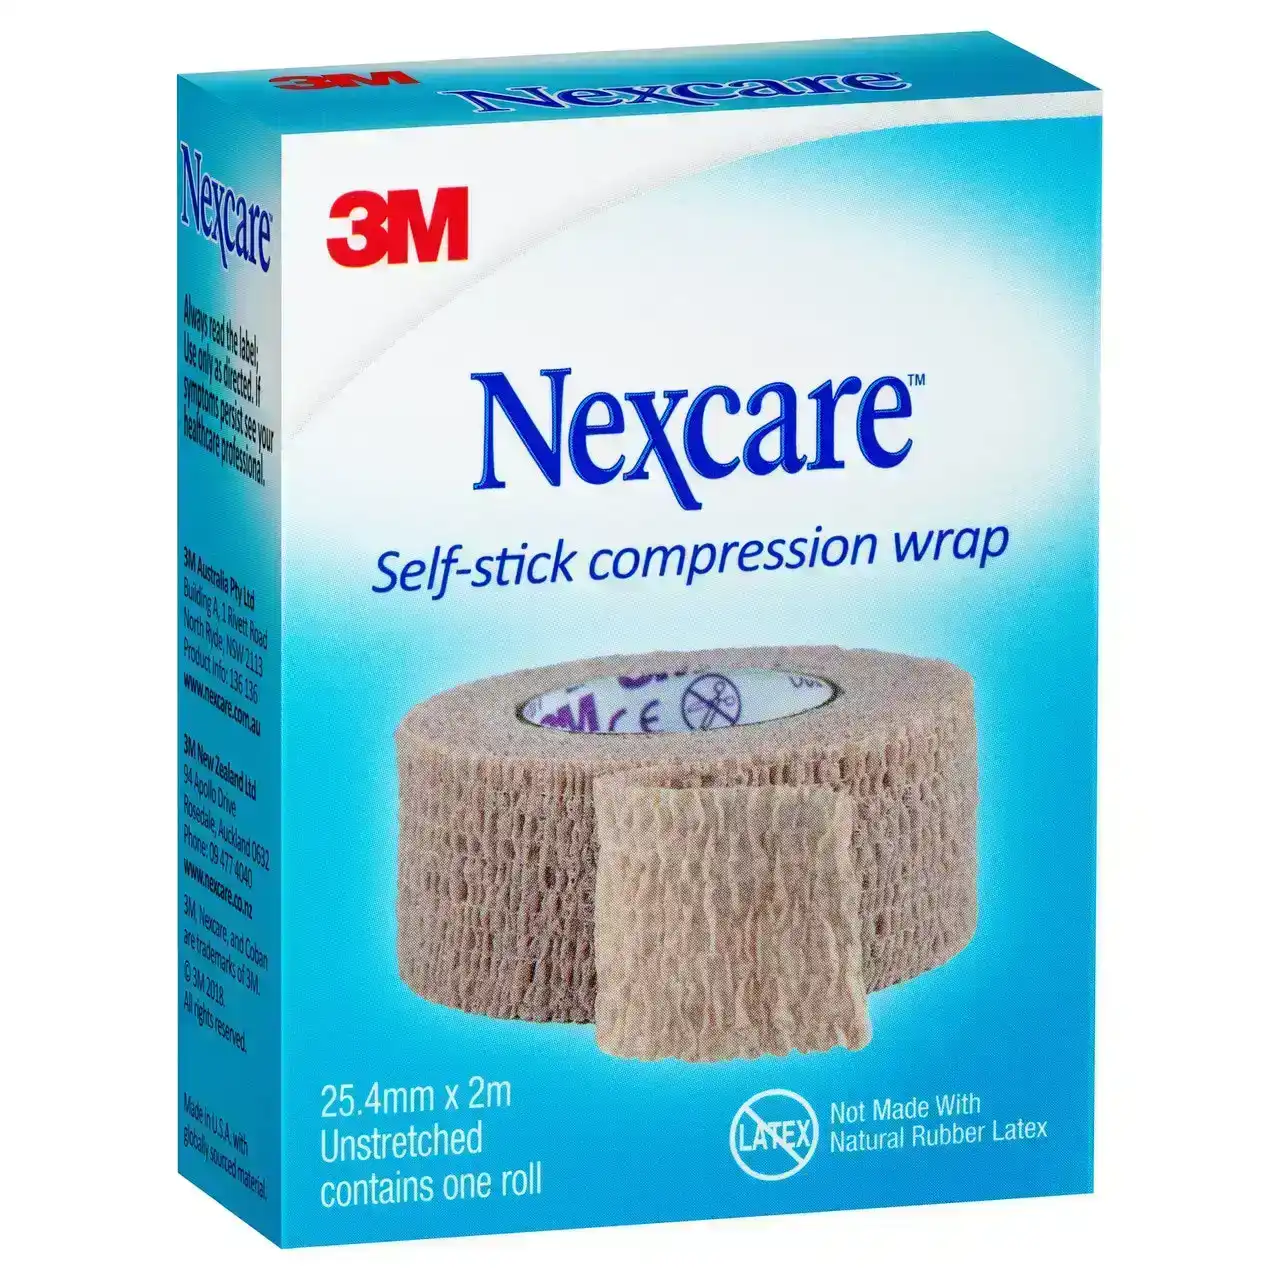 Nexcare Self-Stick Compression Wrap 25.4mm x 2m